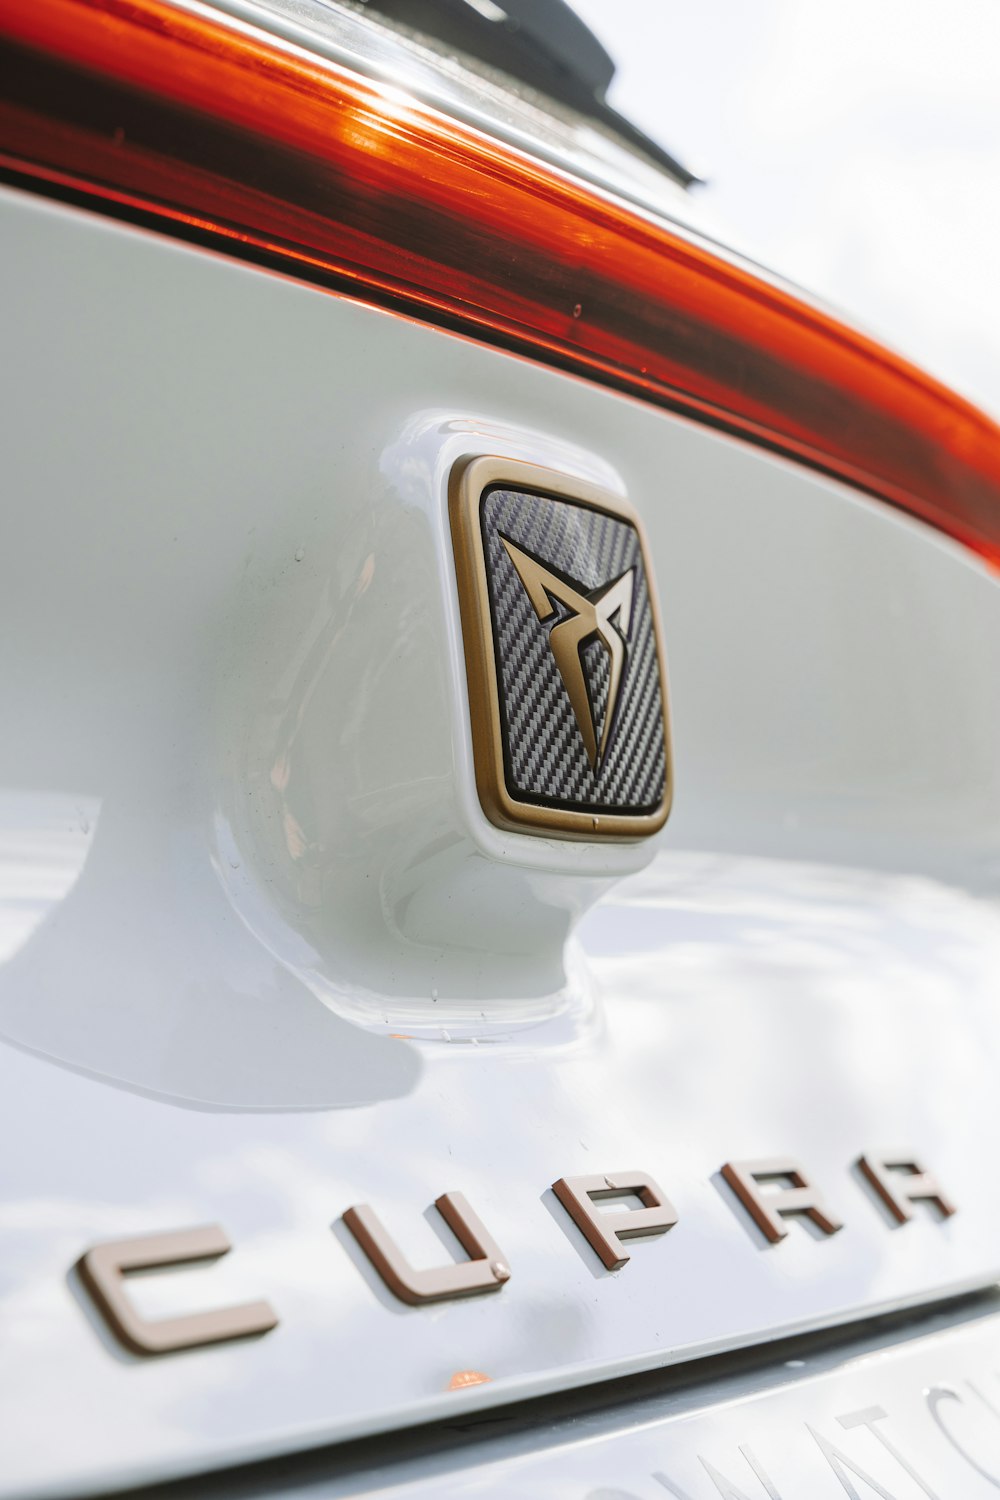 a close up of a car's logo